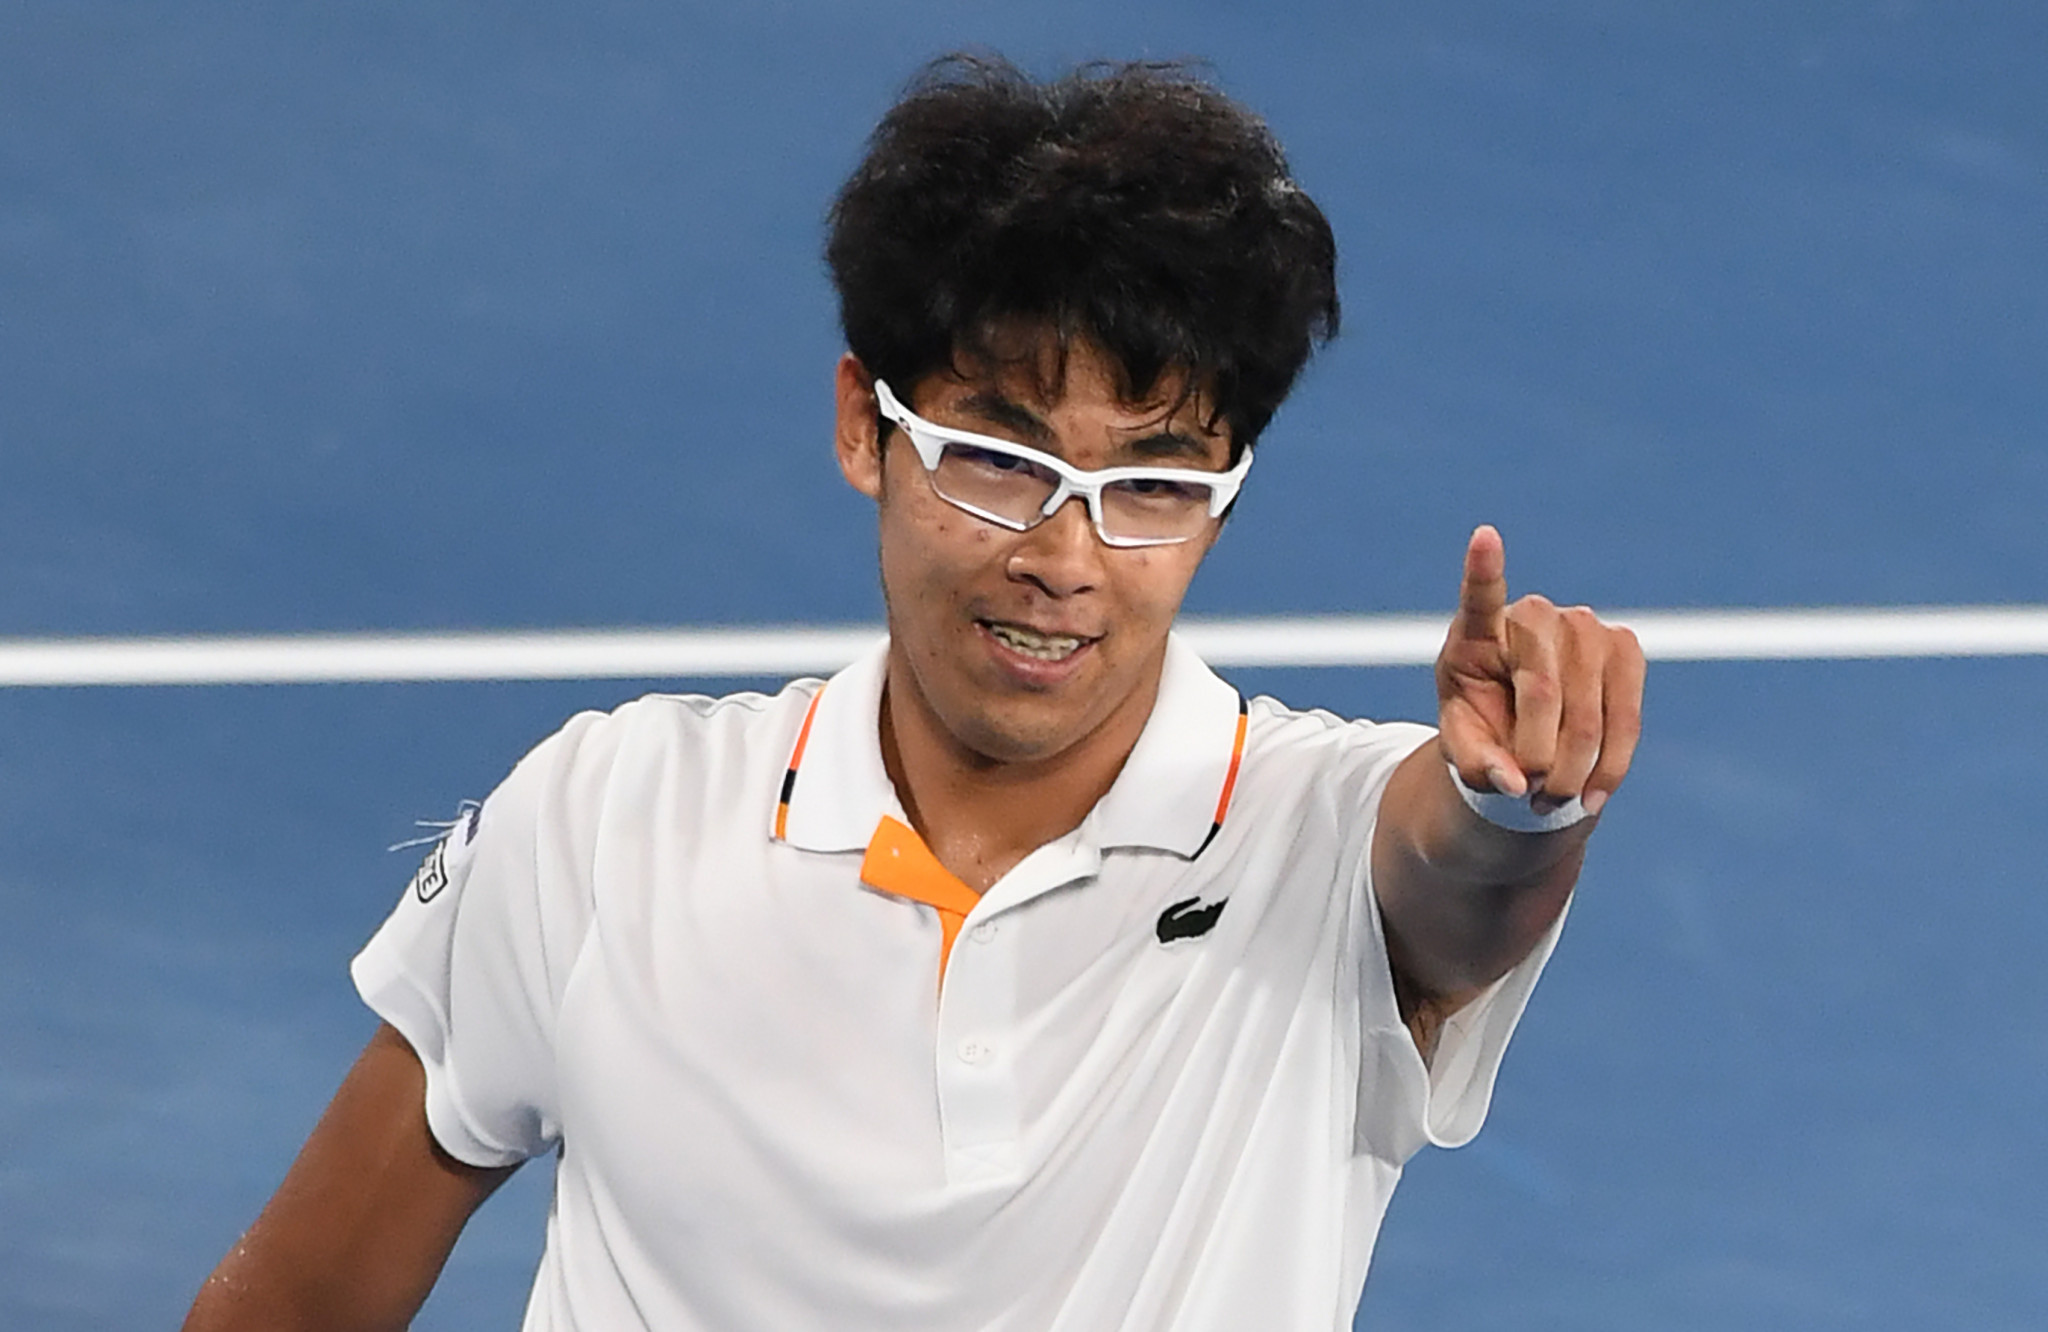 Six-time champion Djokovic suffers defeat to impressive Chung at Australian Open